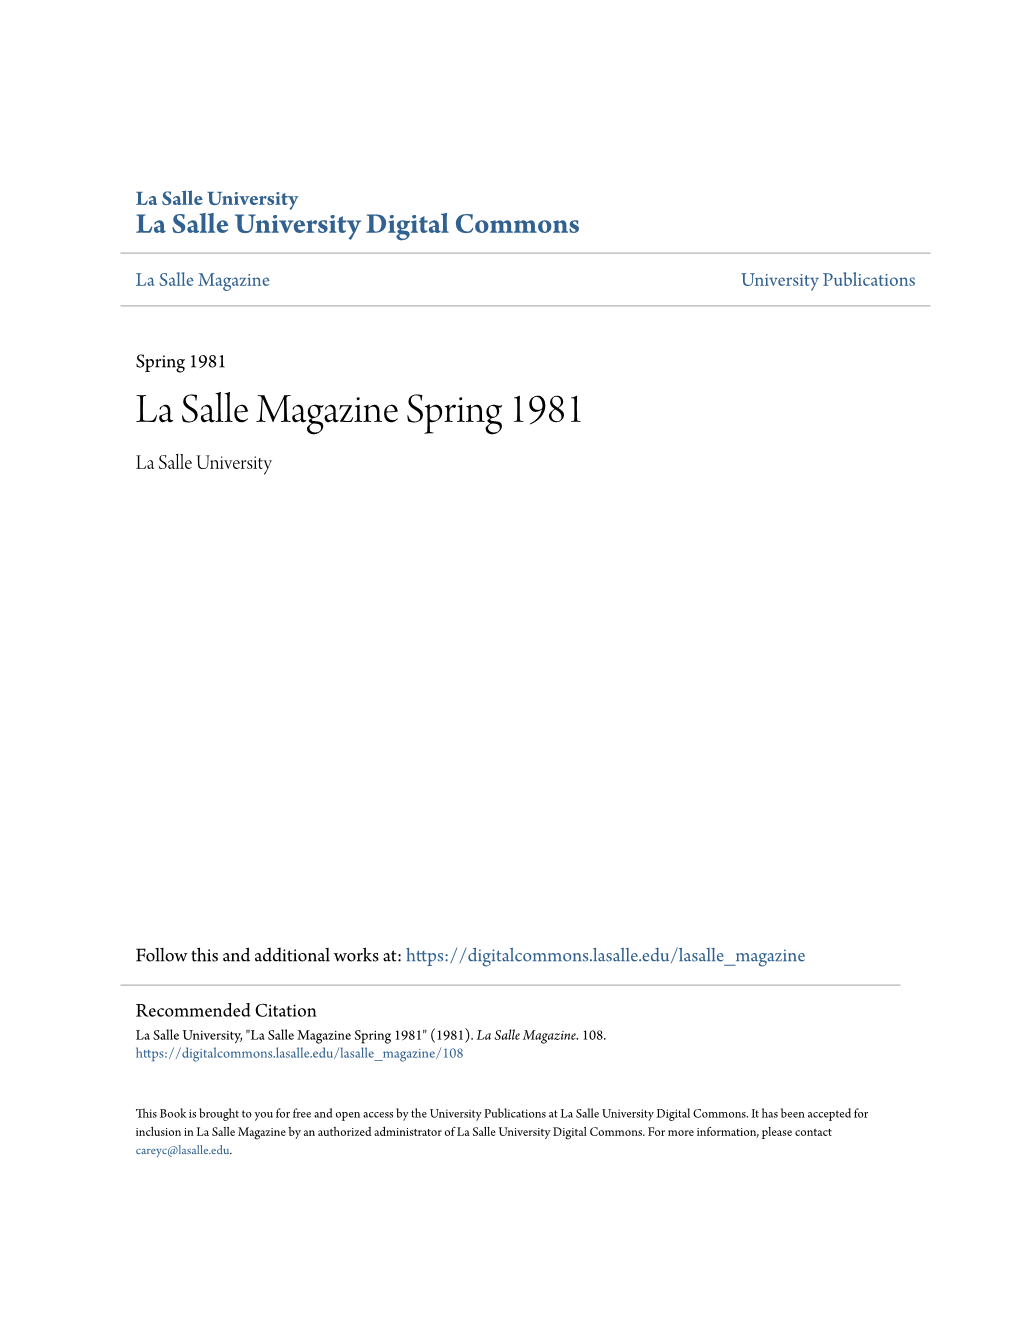 La Salle Magazine Spring 1981 La Salle University